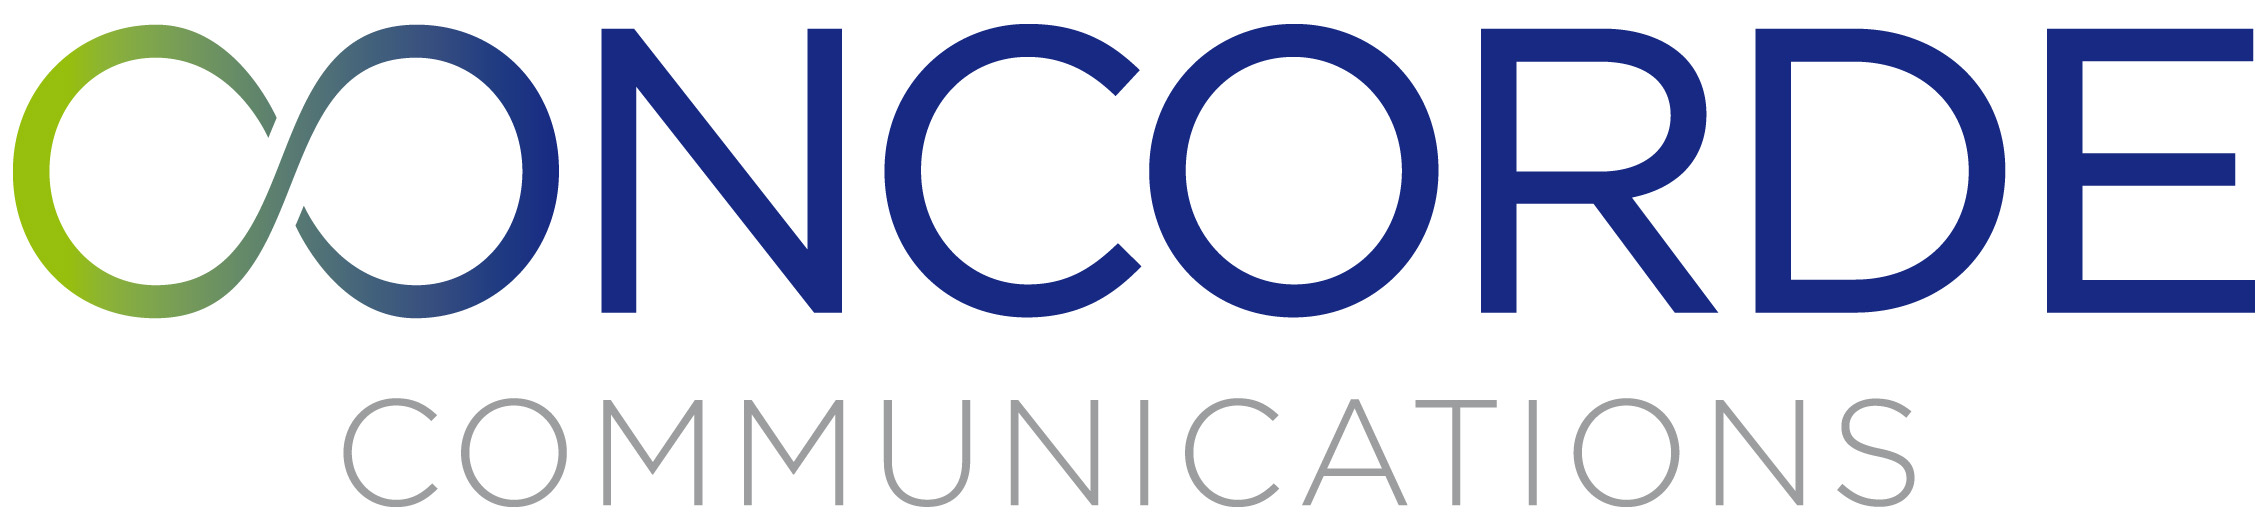 Concorde Communications Logo